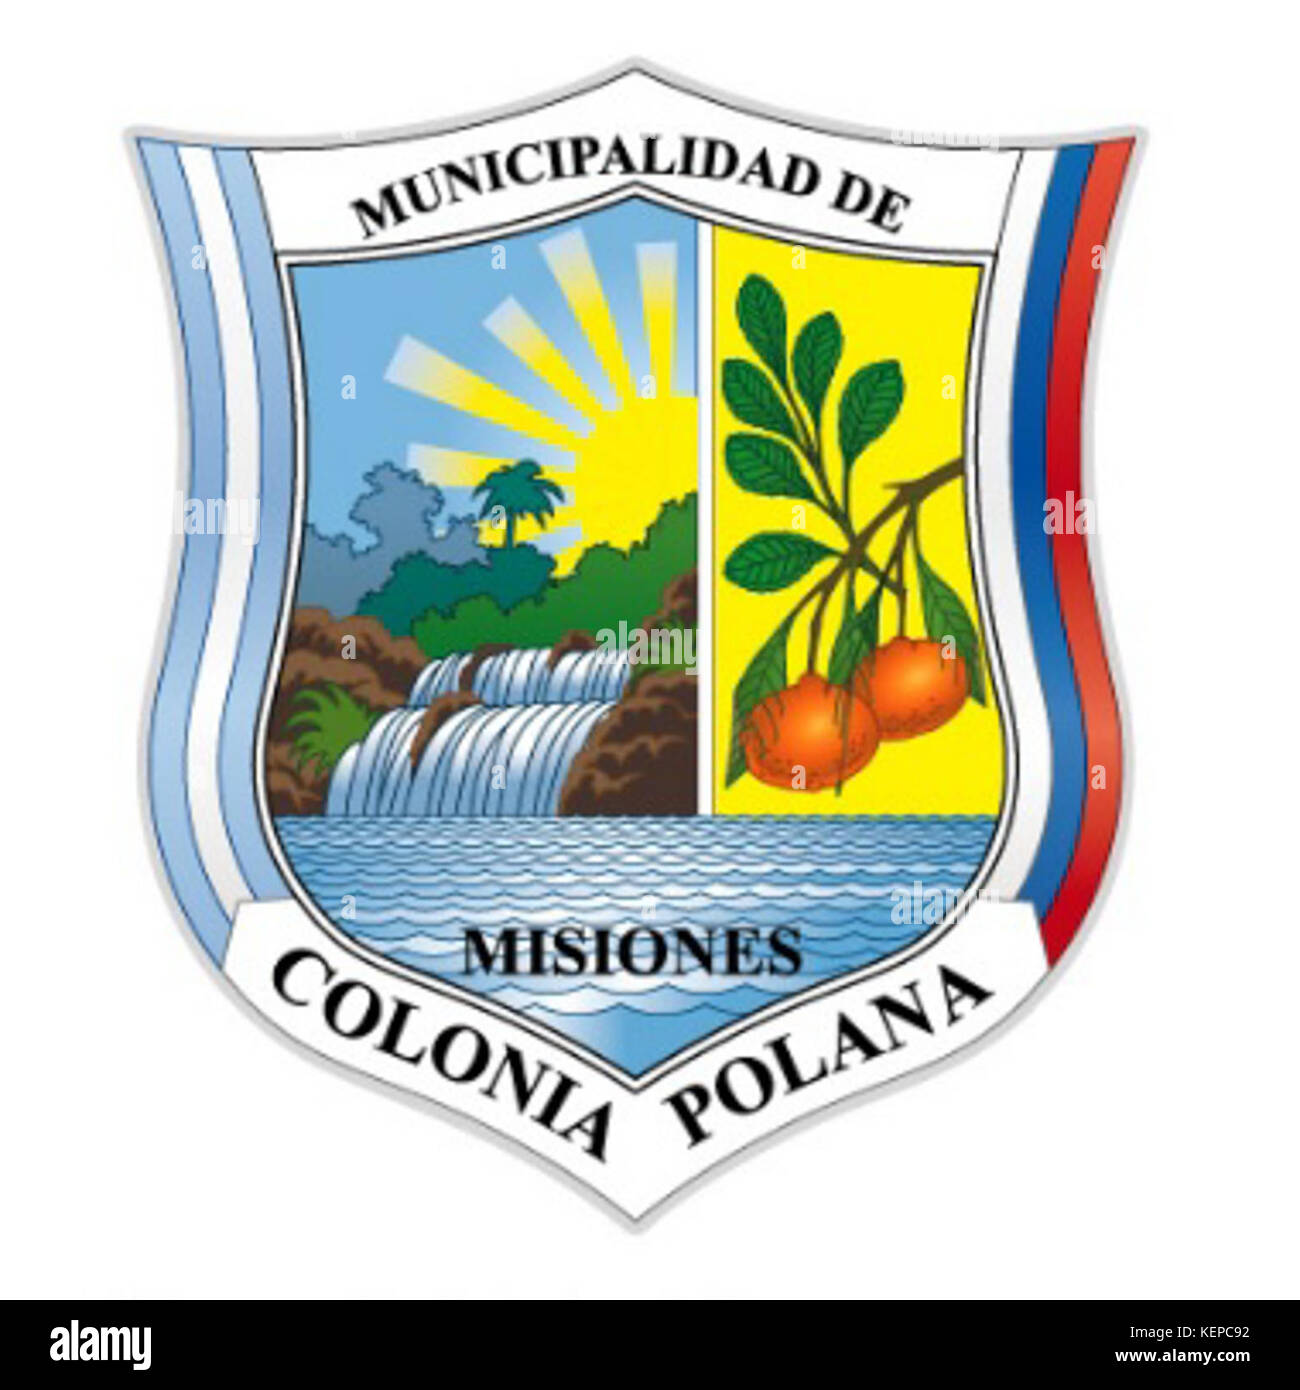 Municipalidad de Colonia Polana Stock Photo